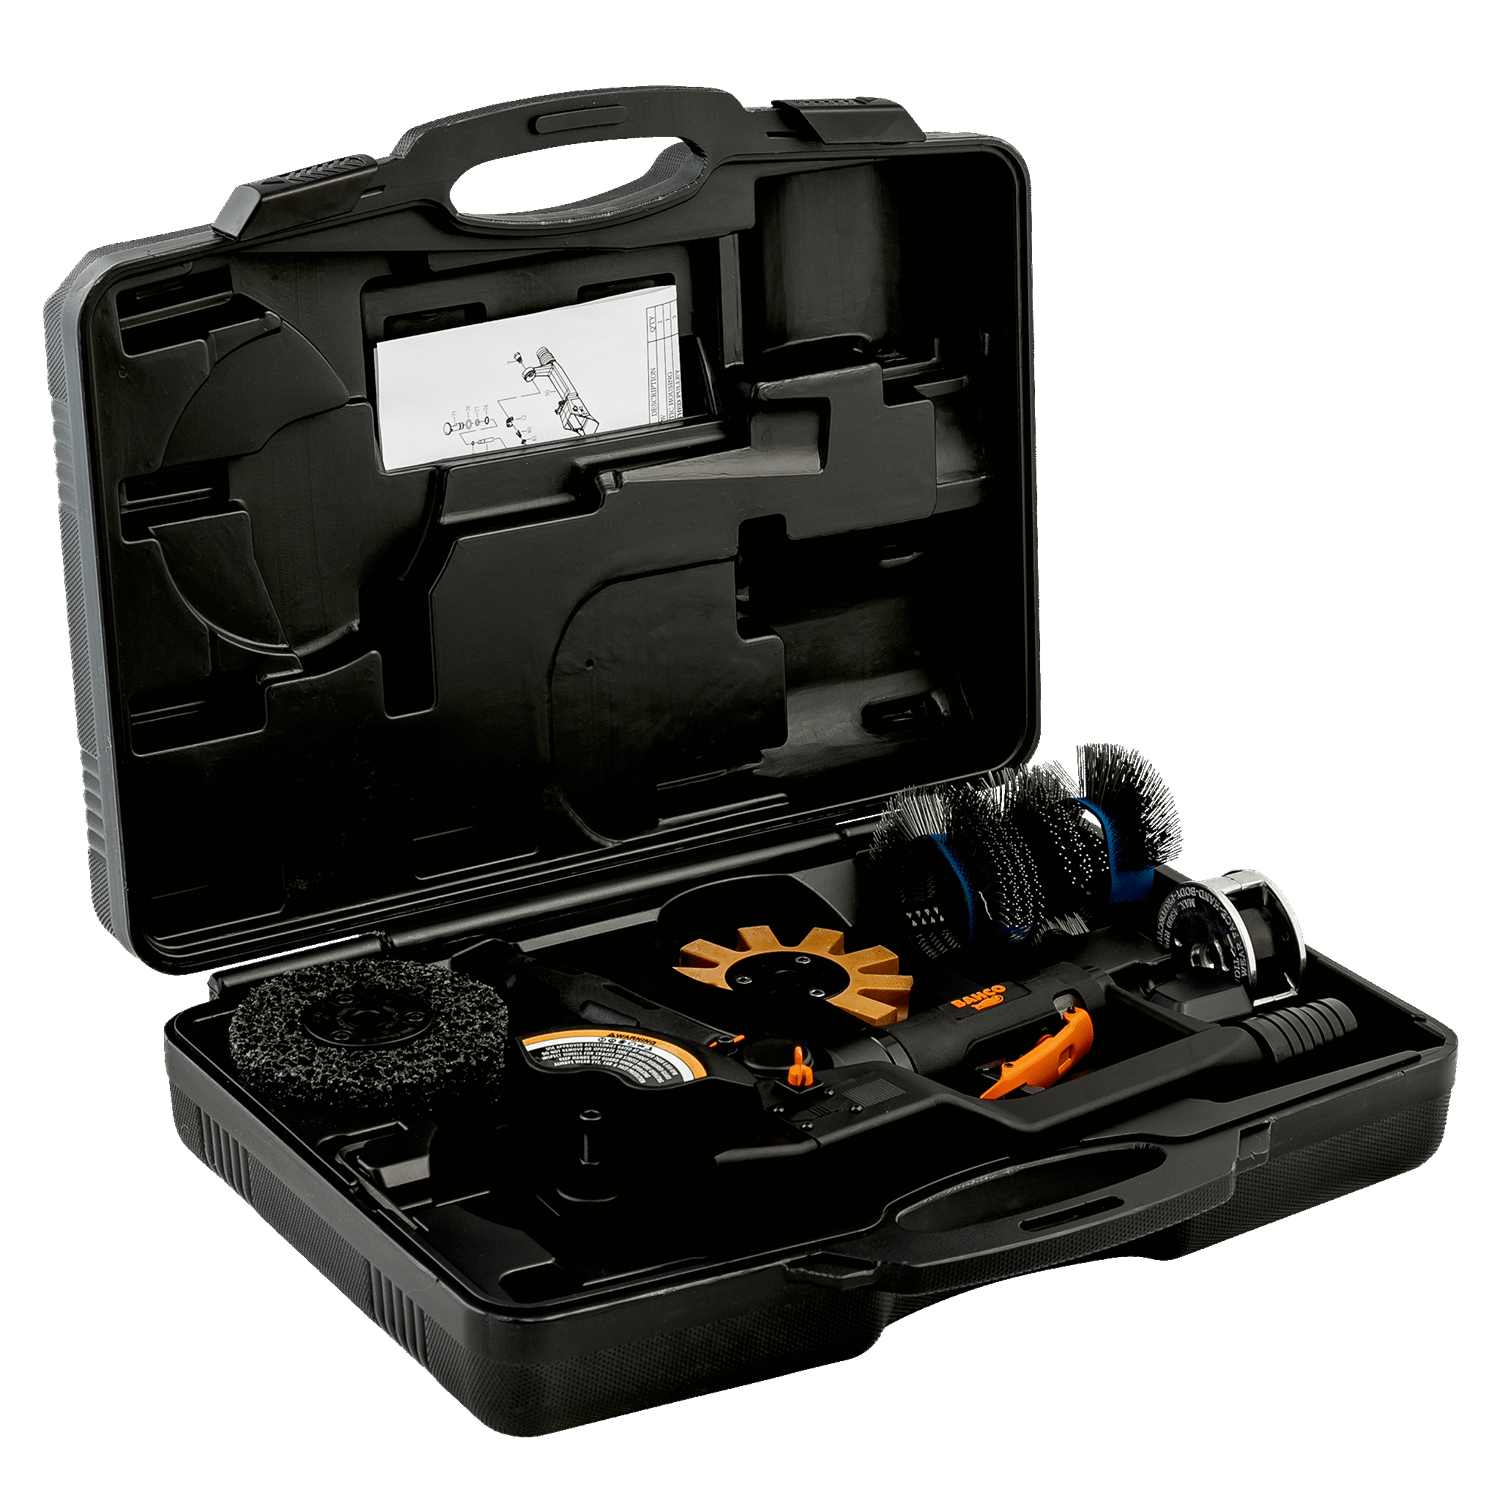 BAHCO BP830K Air Blaster Kit (BAHCO Tools) - Premium Air Blaster from BAHCO - Shop now at Yew Aik.